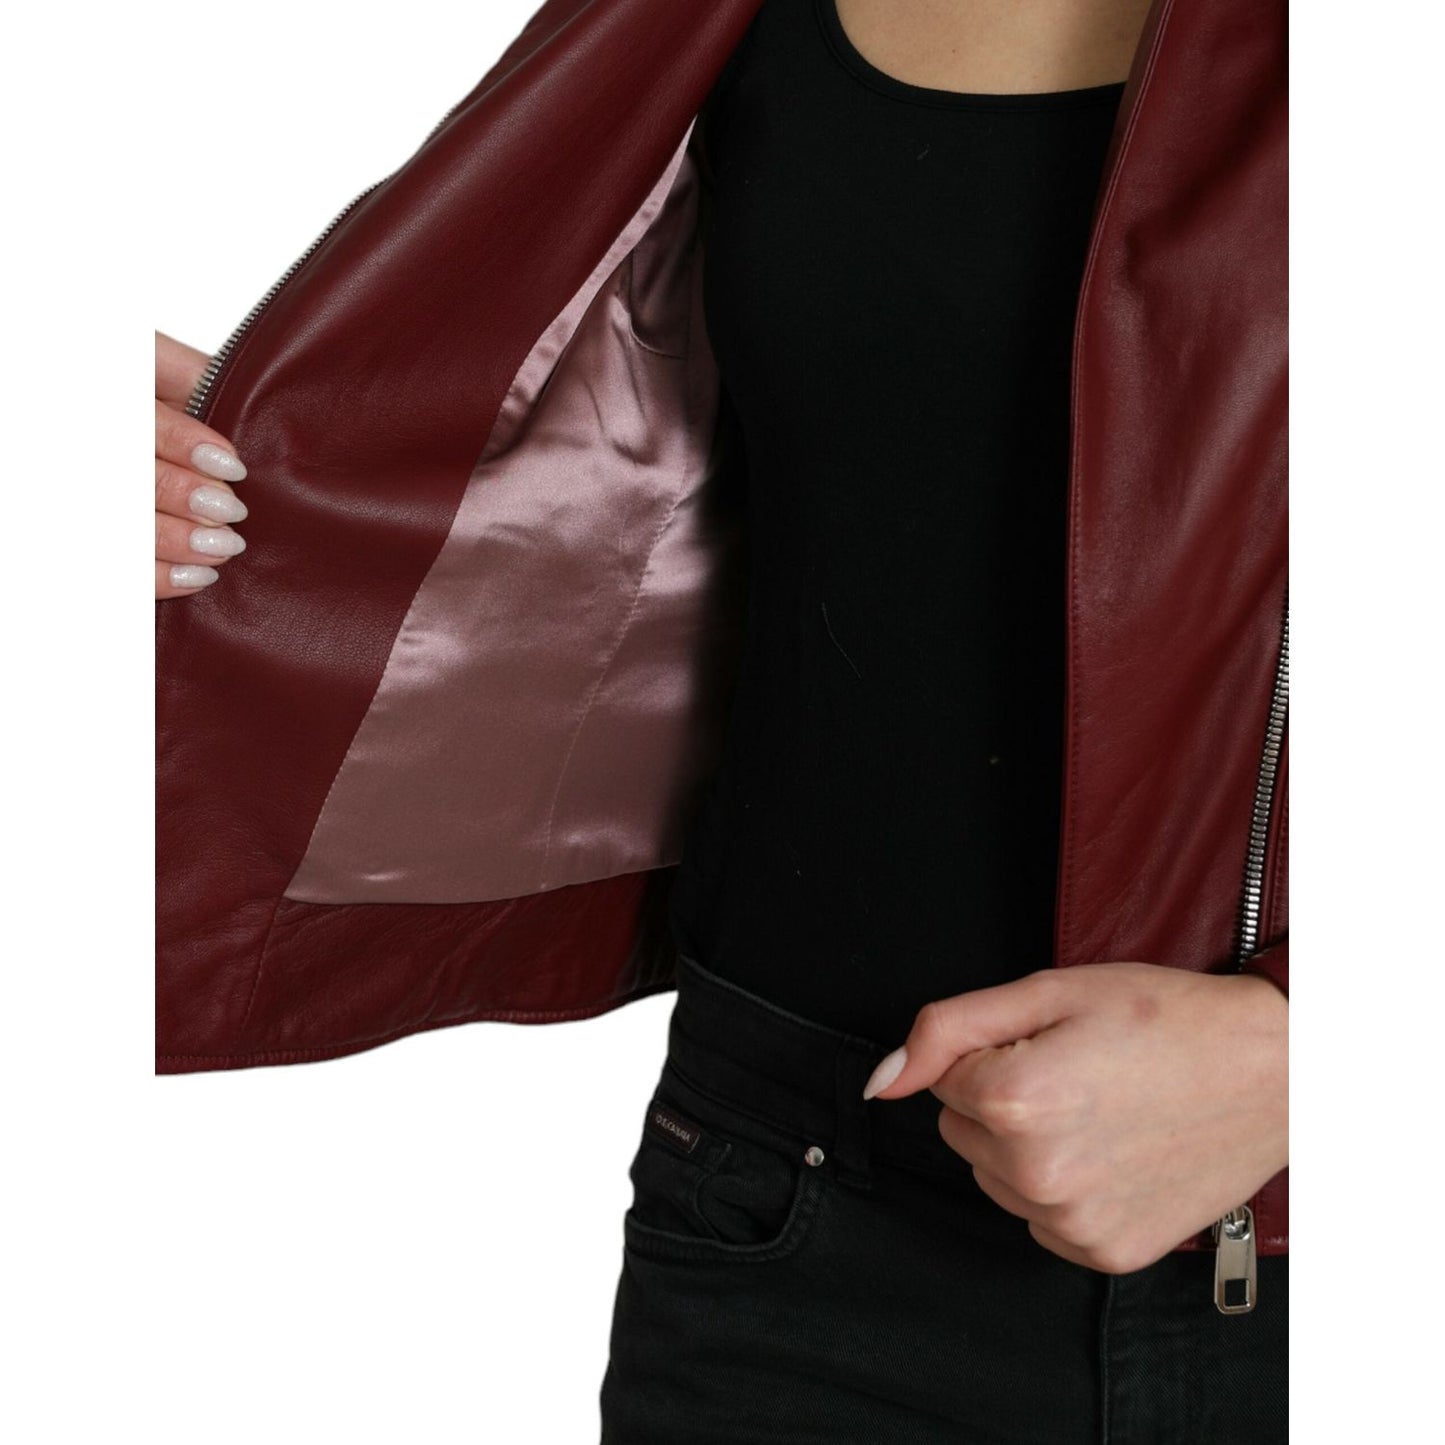 Dolce & Gabbana Bordeaux Biker Leather Jacket bordeaux-leather-biker-coat-lambskin-jacket 465A9339-BG-scaled-fb7b1203-822.jpg